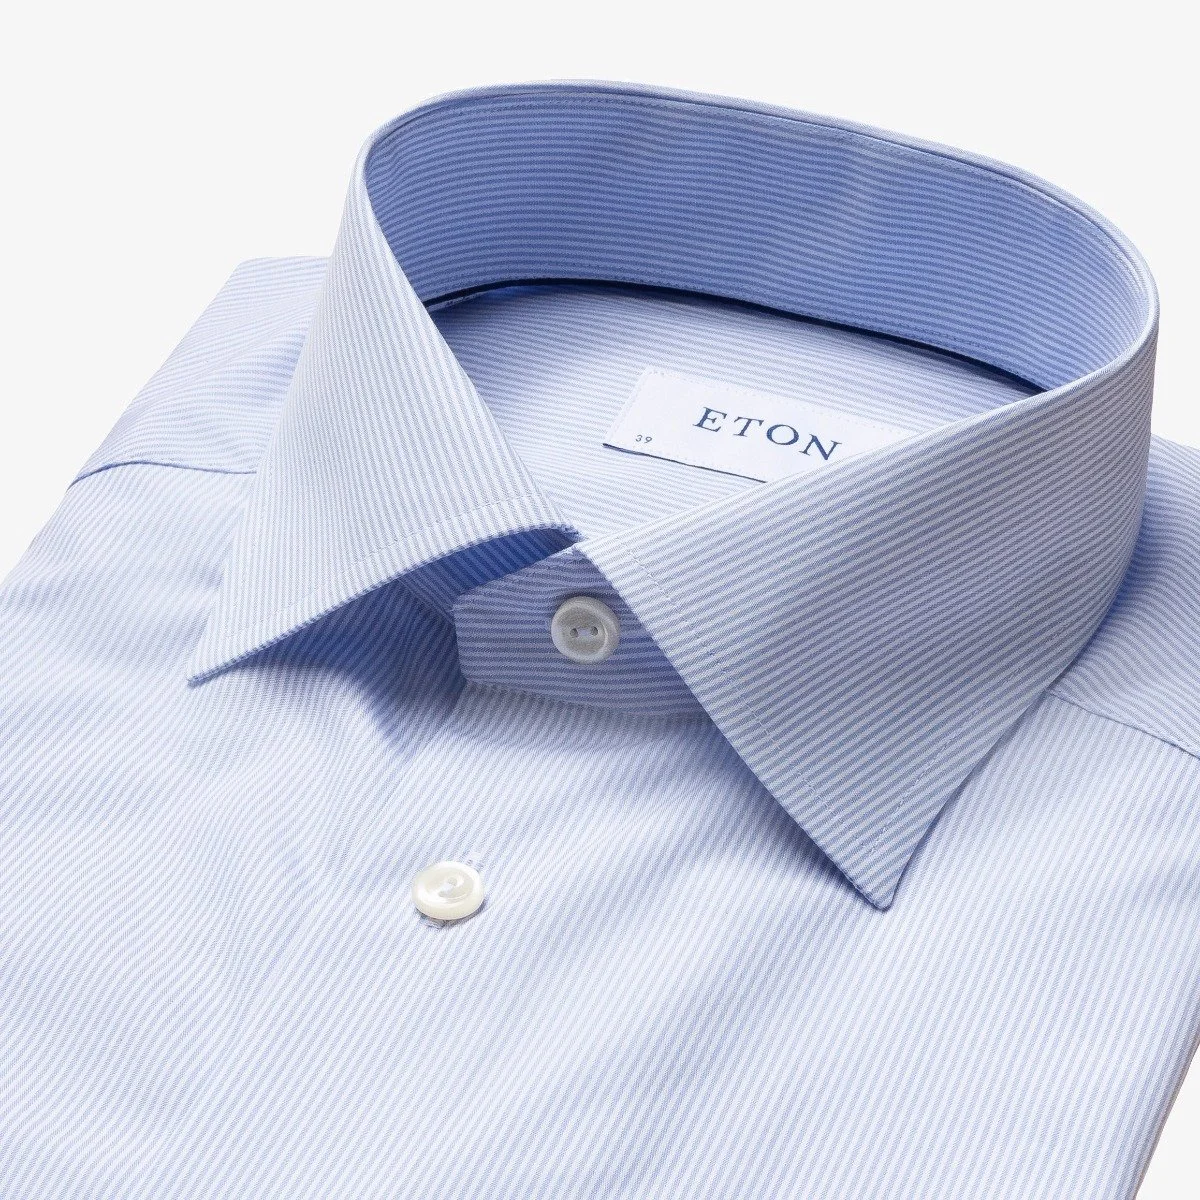 Eton light blue slim fit striped poplin men's dress shirt